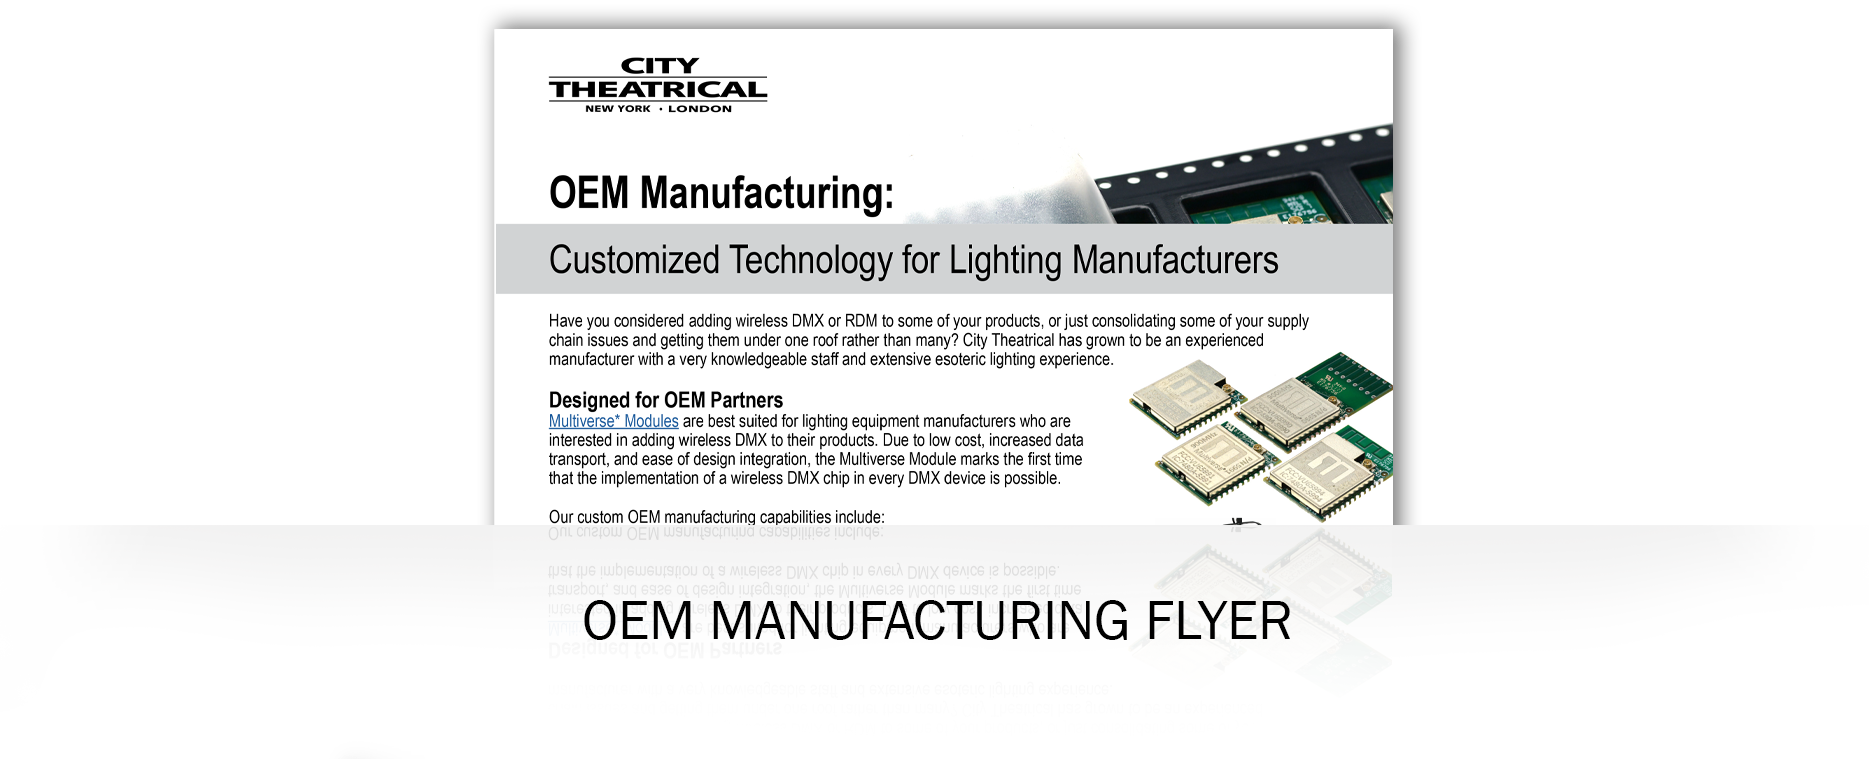 OEM Manufacturing Flyer